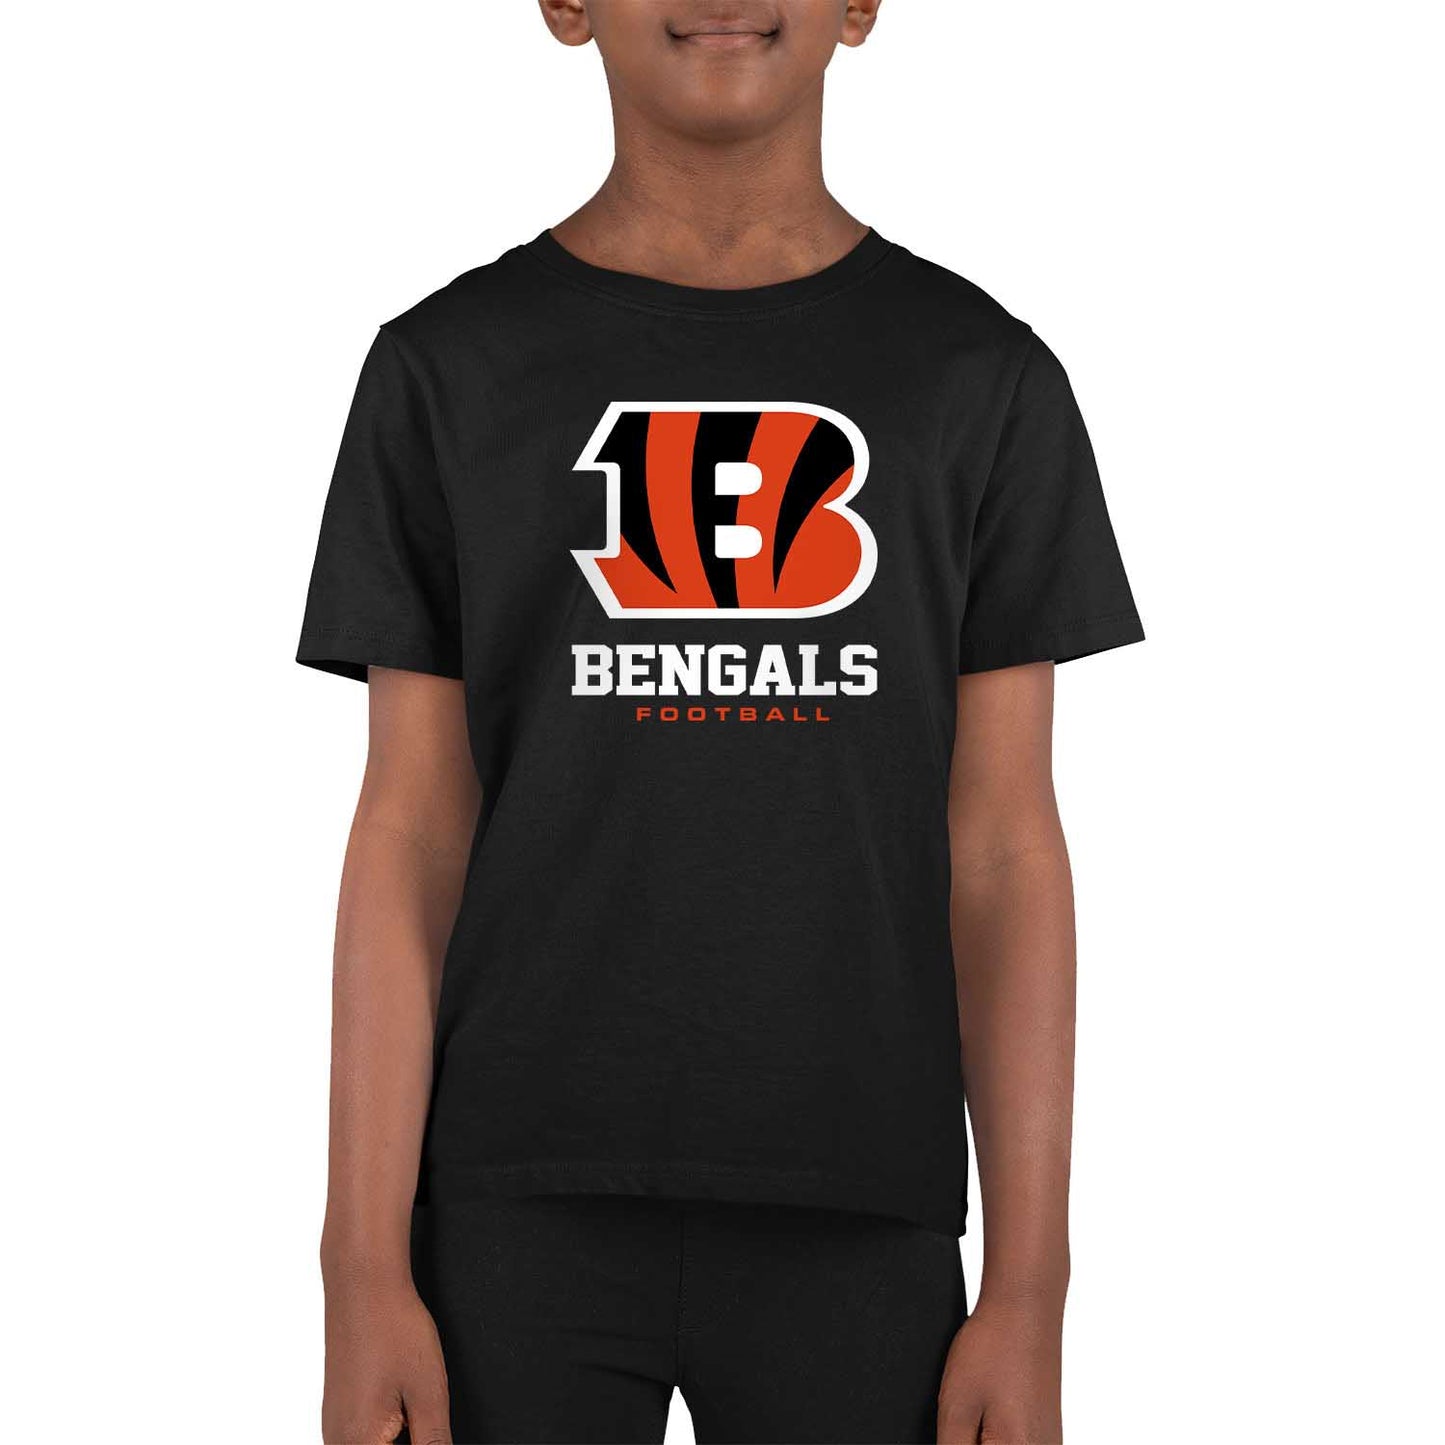 Cincinnati Bengals Youth NFL Ultimate Fan Logo Short Sleeve T-Shirt - Black